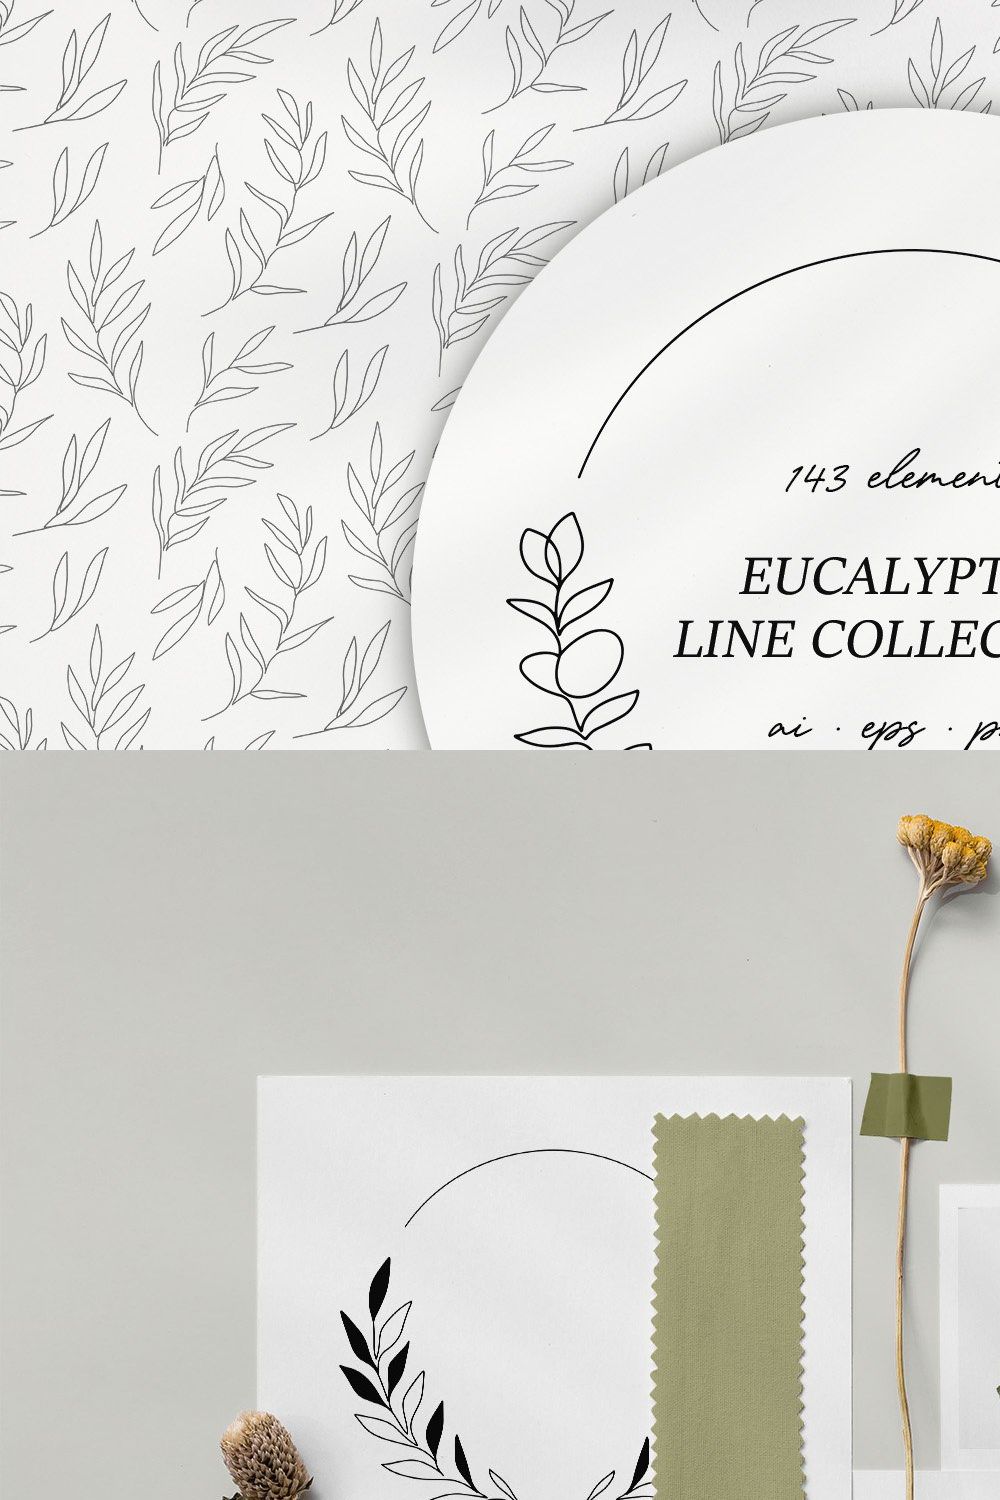 Eucalyptus line collection pinterest preview image.